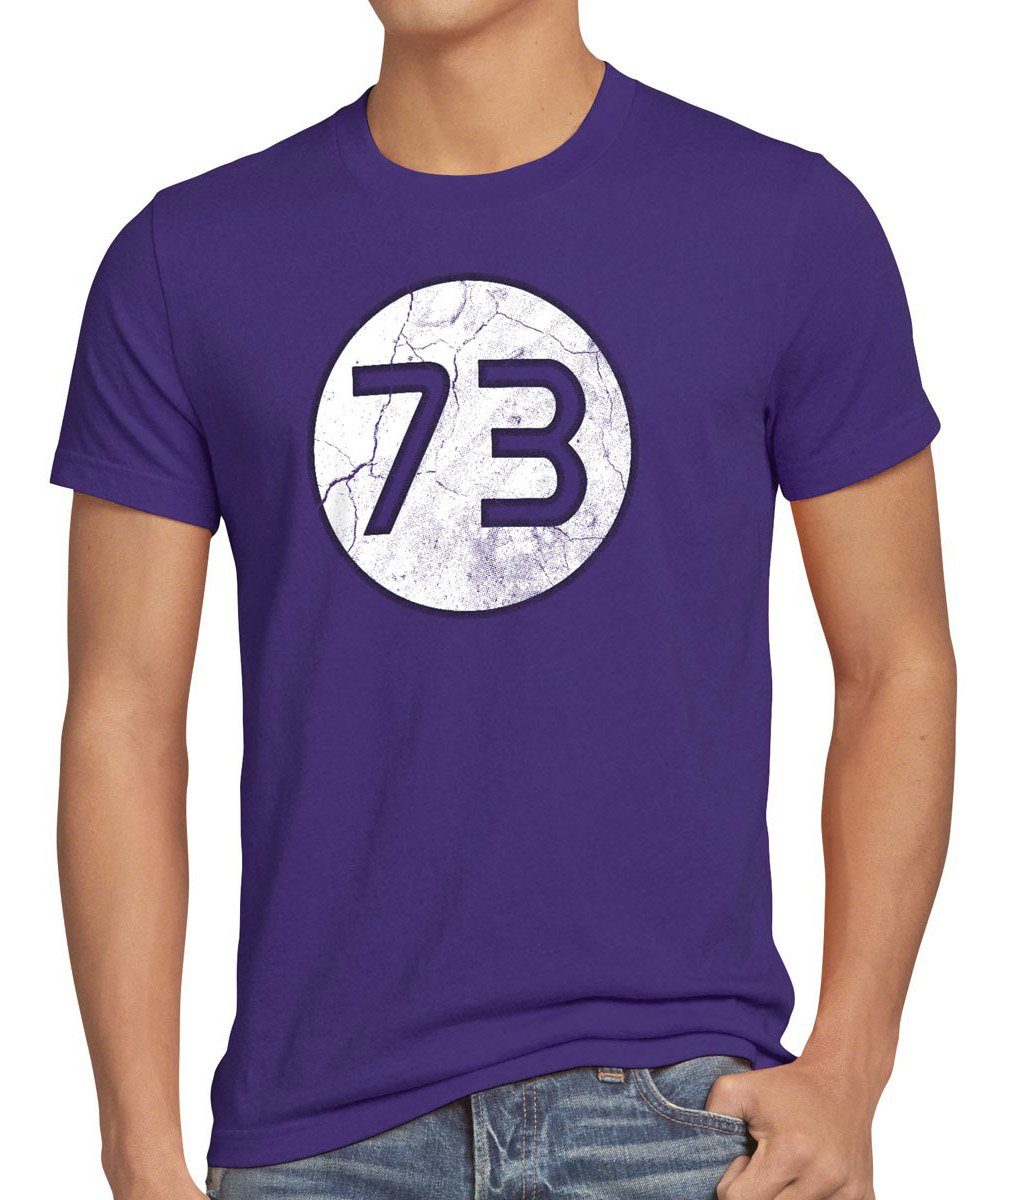 style3 Print-Shirt leonard cooper Herren Lieblingszahl 73 bang Sheldon tbbt T-Shirt lila big theory zahl